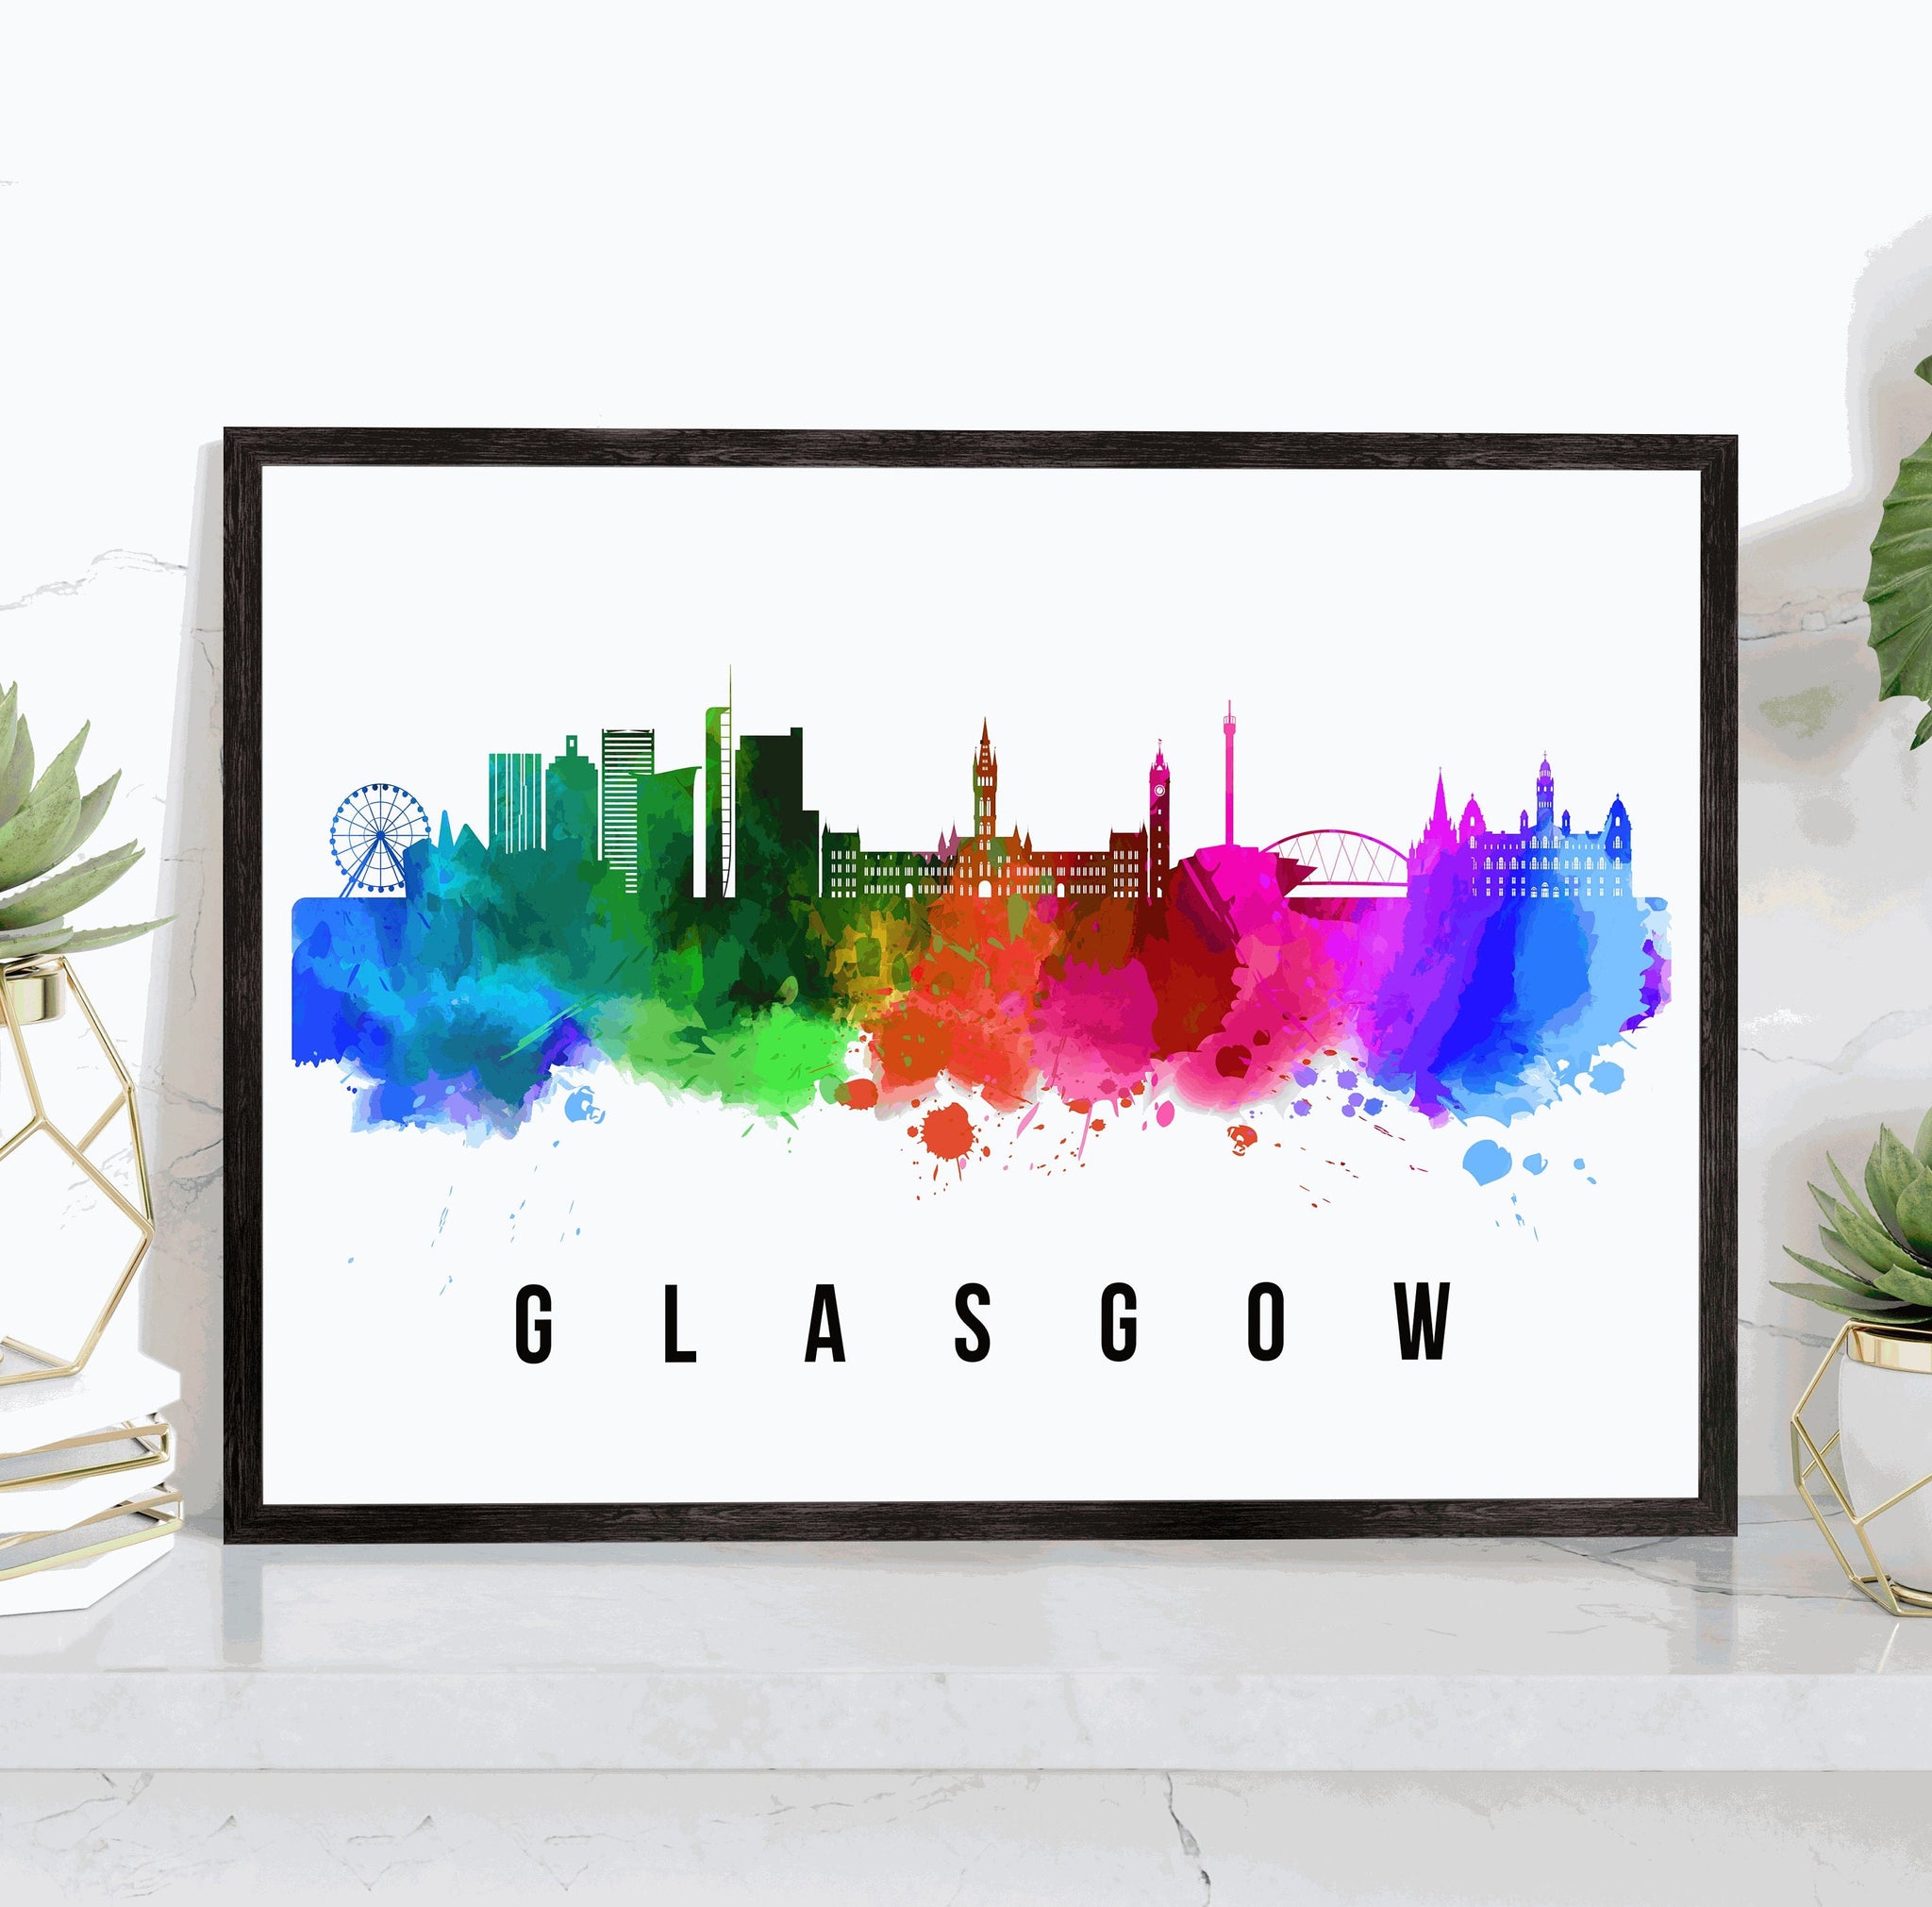 GLASGOW - SCOTLAND Poster,  Skyline Poster Cityscape and Landmark Glasgow Illustration Home Wall Art, Office Decor